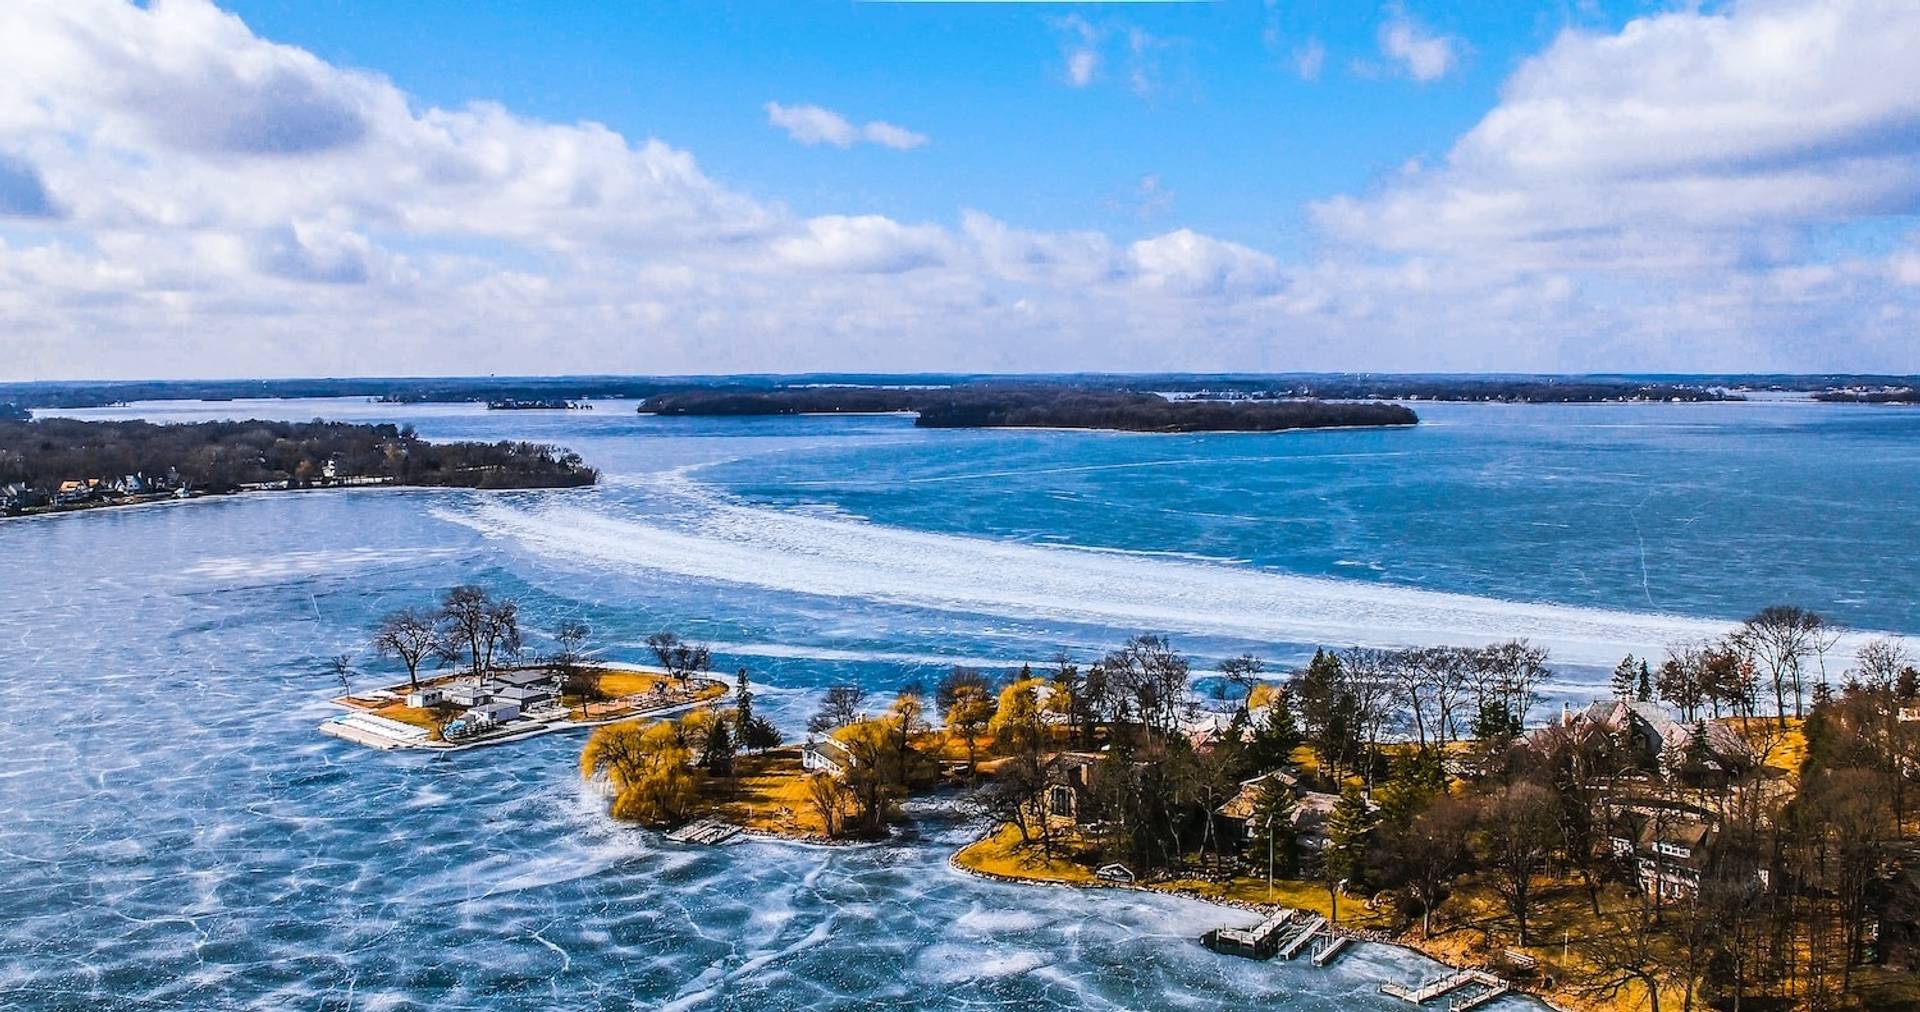 Aerial view of frozen Lake Minnetonka to represent where to buy e-bikes in Minnesota